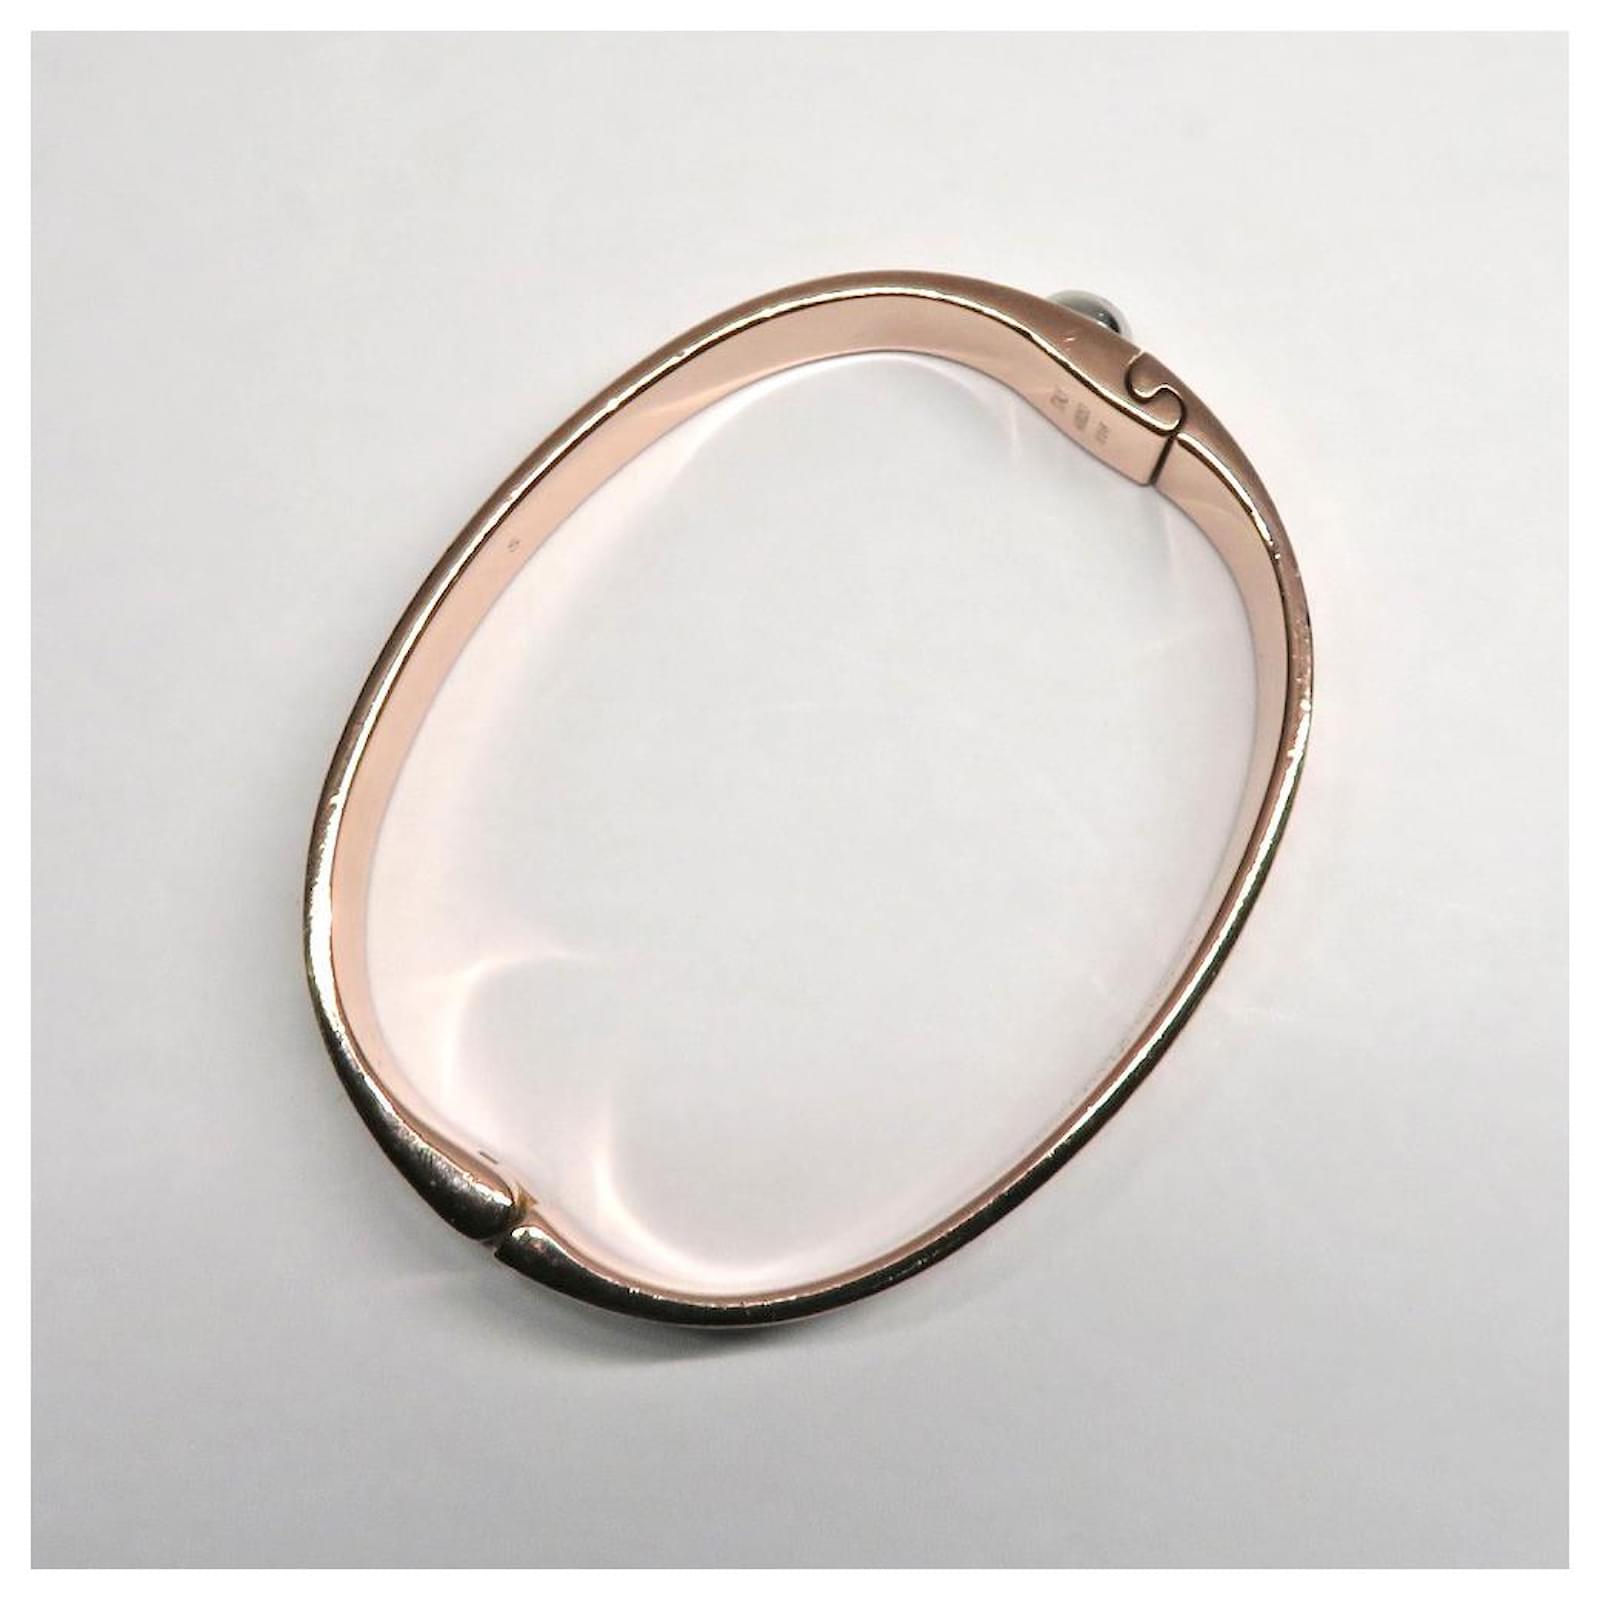 Louis Vuitton Cuff Nanogram Bracelet Bangle Monogram M00253 S Size Rose  Gold Metal Pink Golden ref.707755 - Joli Closet